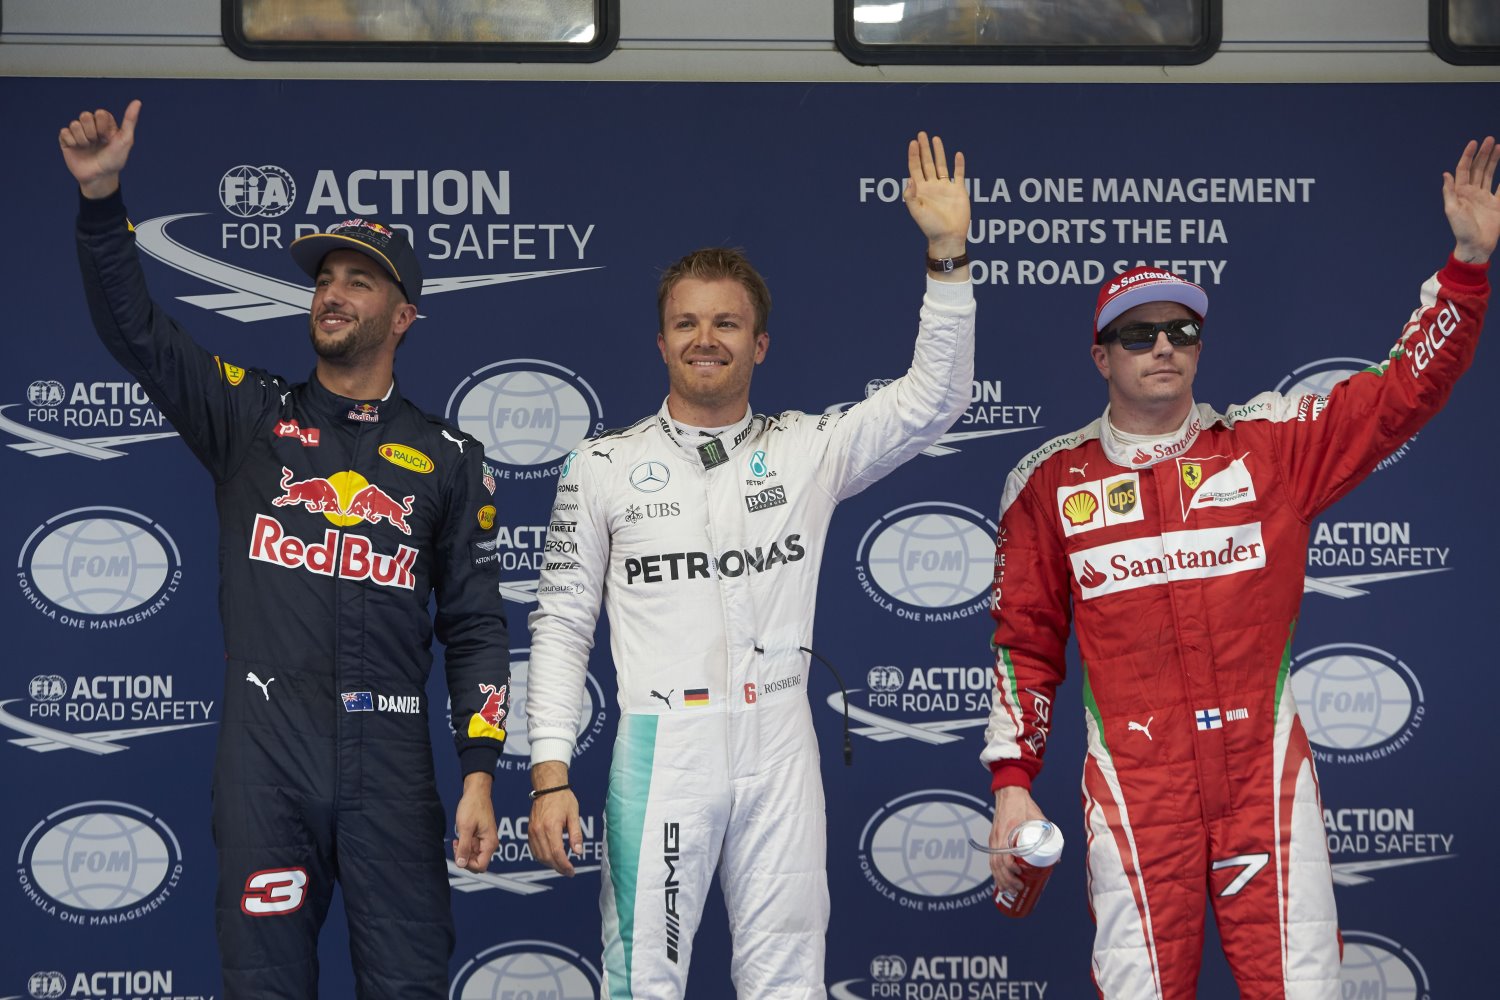 From left, Ricciardo, Rosberg and Raikkonen